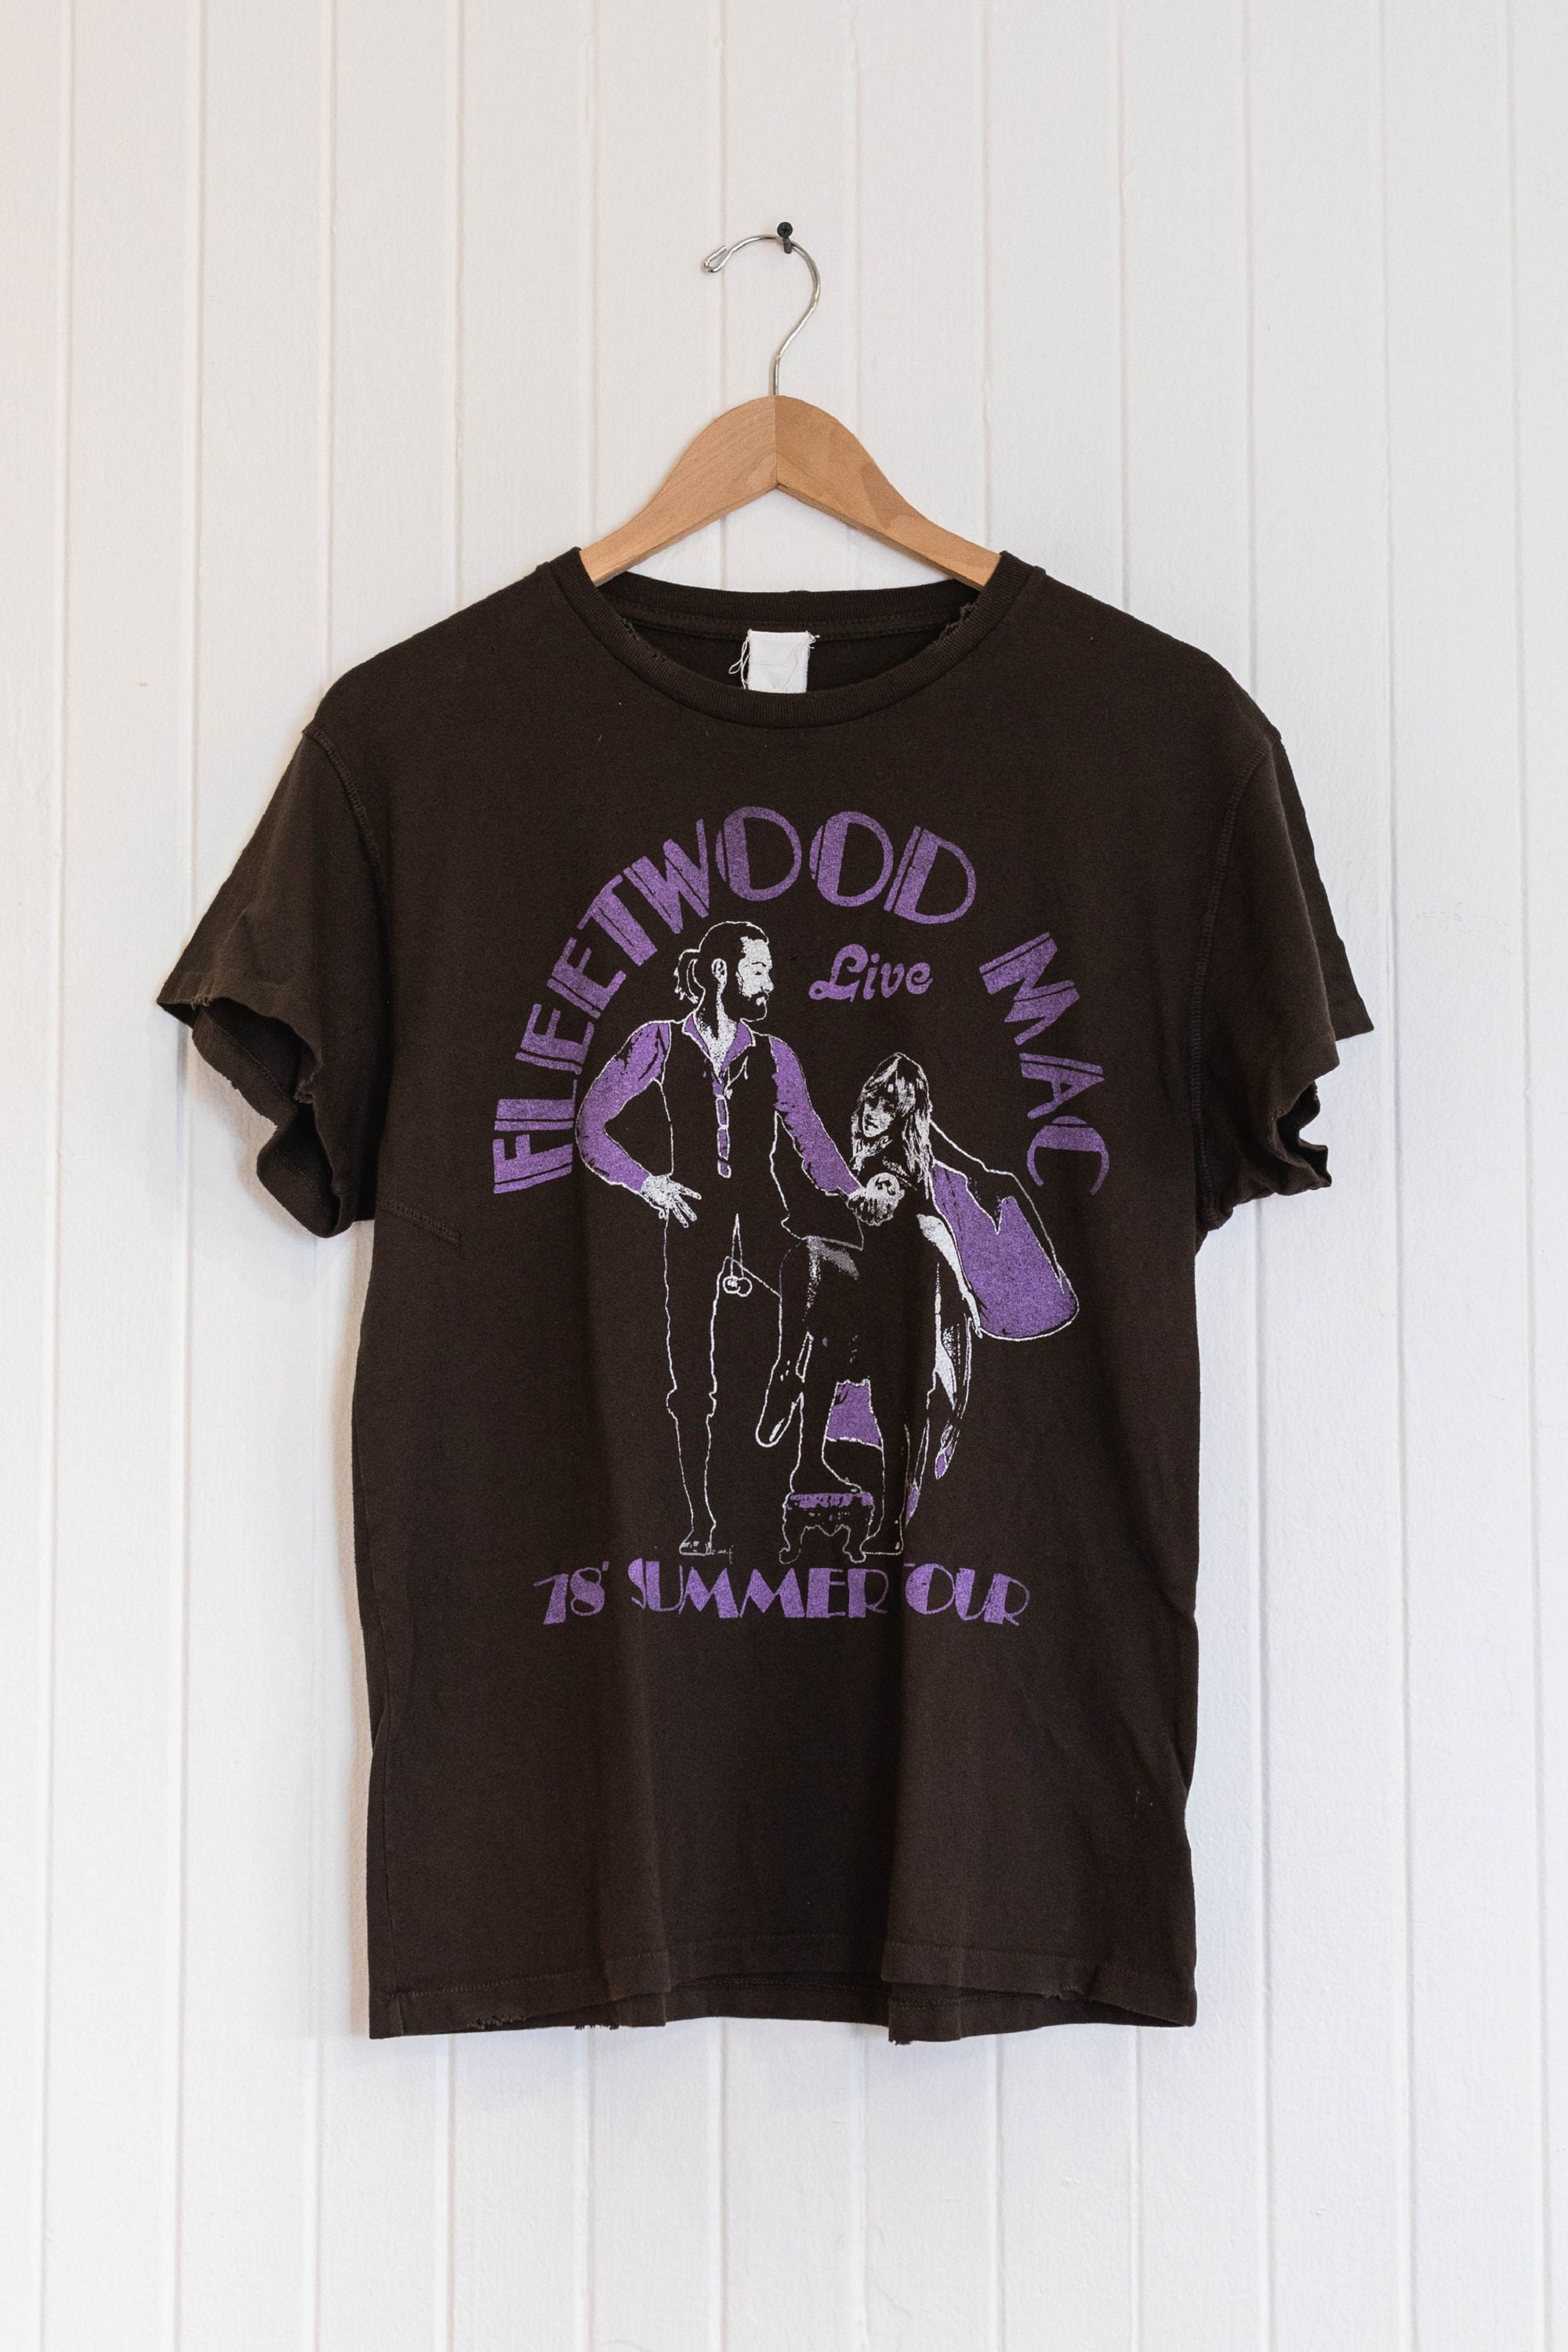 Discover Fleetwood Mac 78 Summer Tour Tee, vintage retro t-shirt, brand new shirt